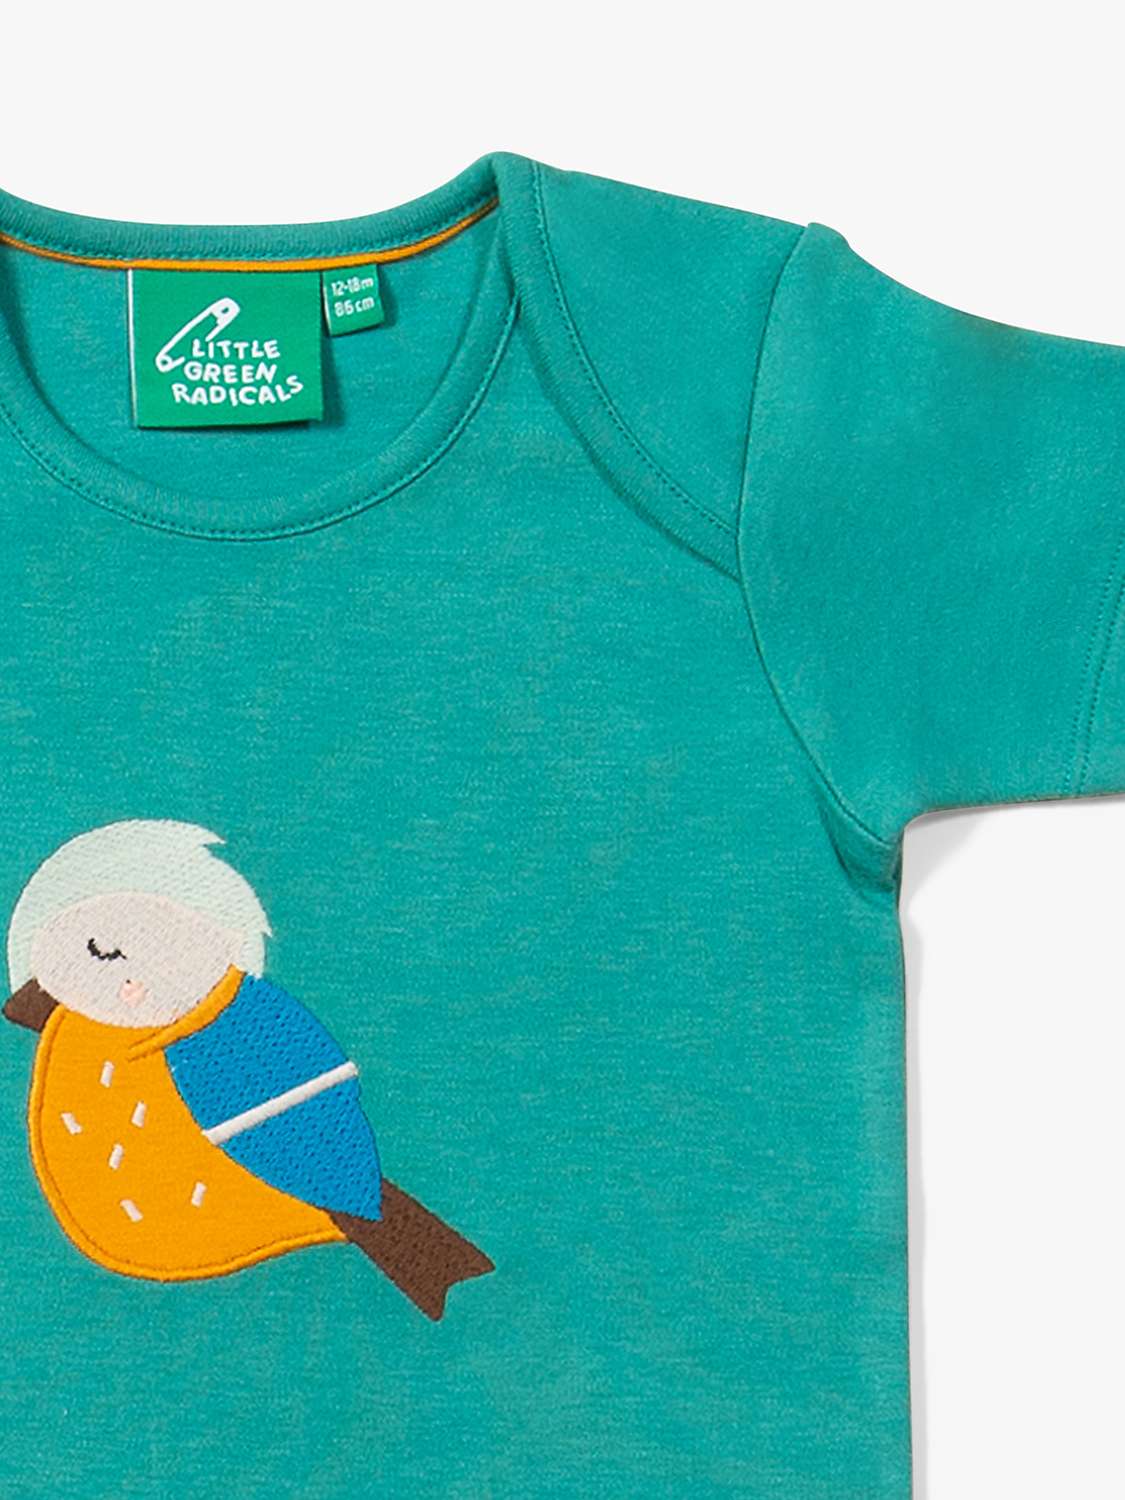 Buy Little Green Radicals Baby Organic Cotton Little Bird Applique Short Sleeve T-Shirt, Teal Online at johnlewis.com